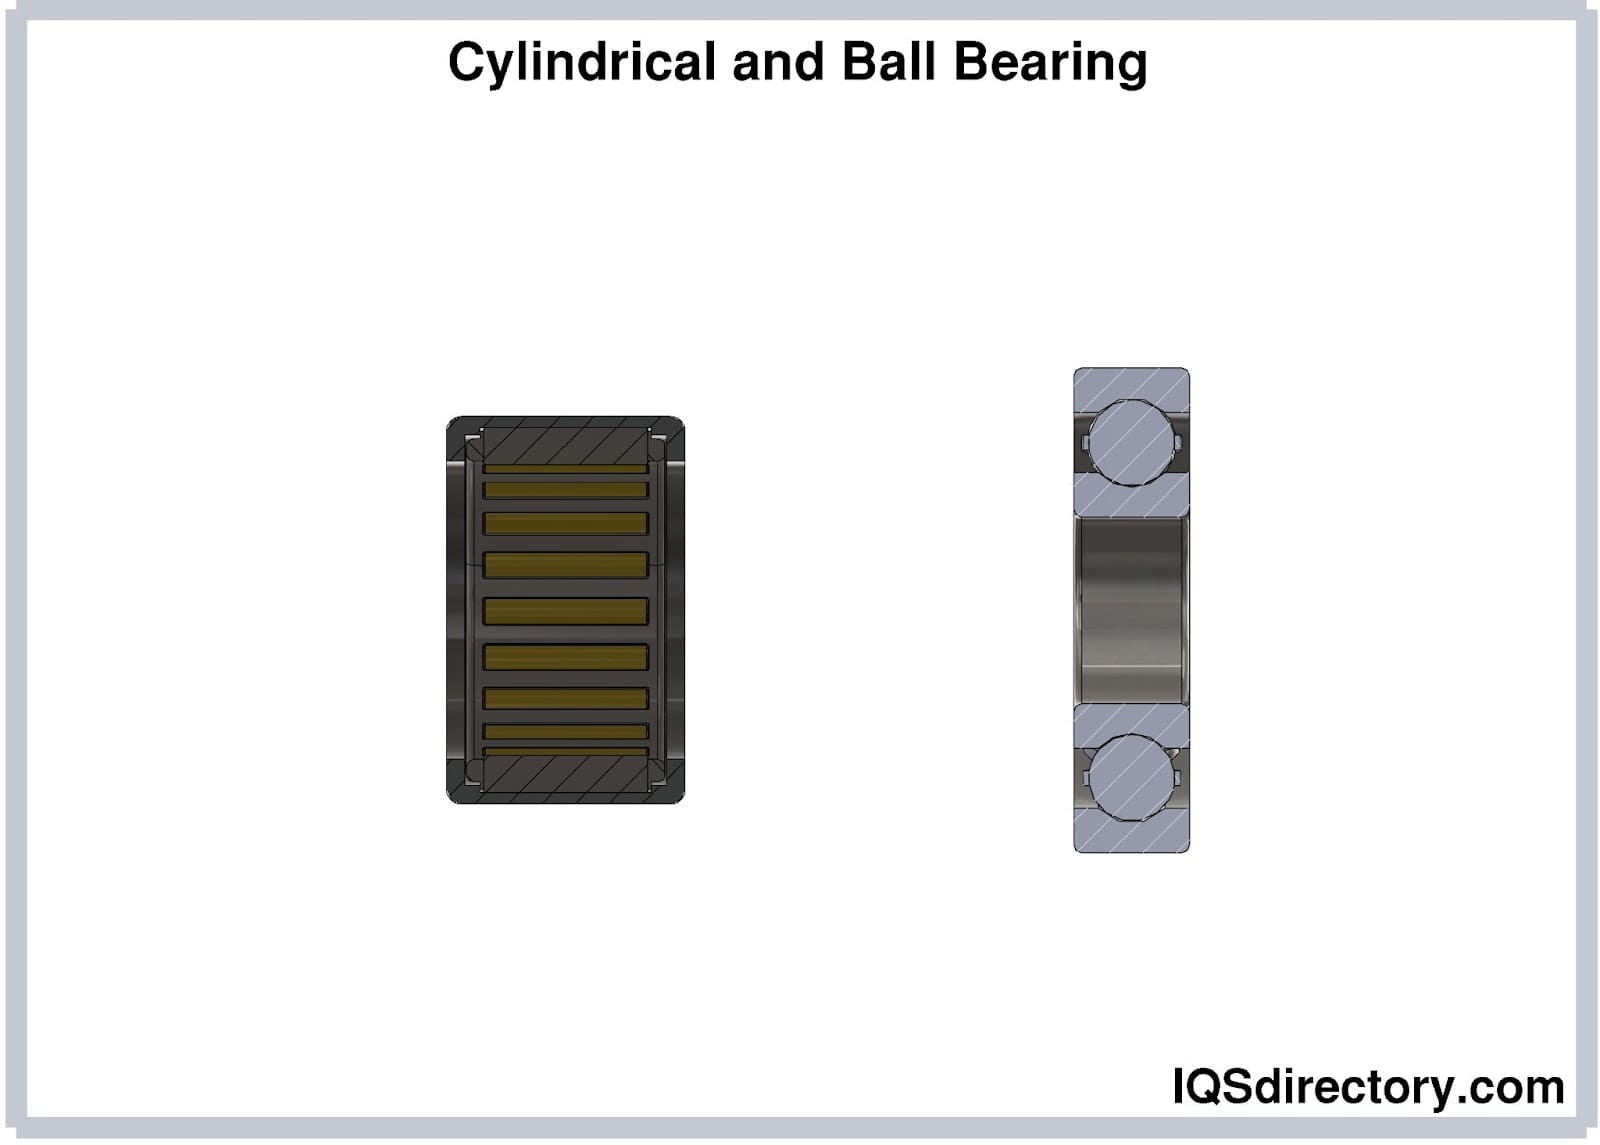 Cylindrical and Ball Bearing